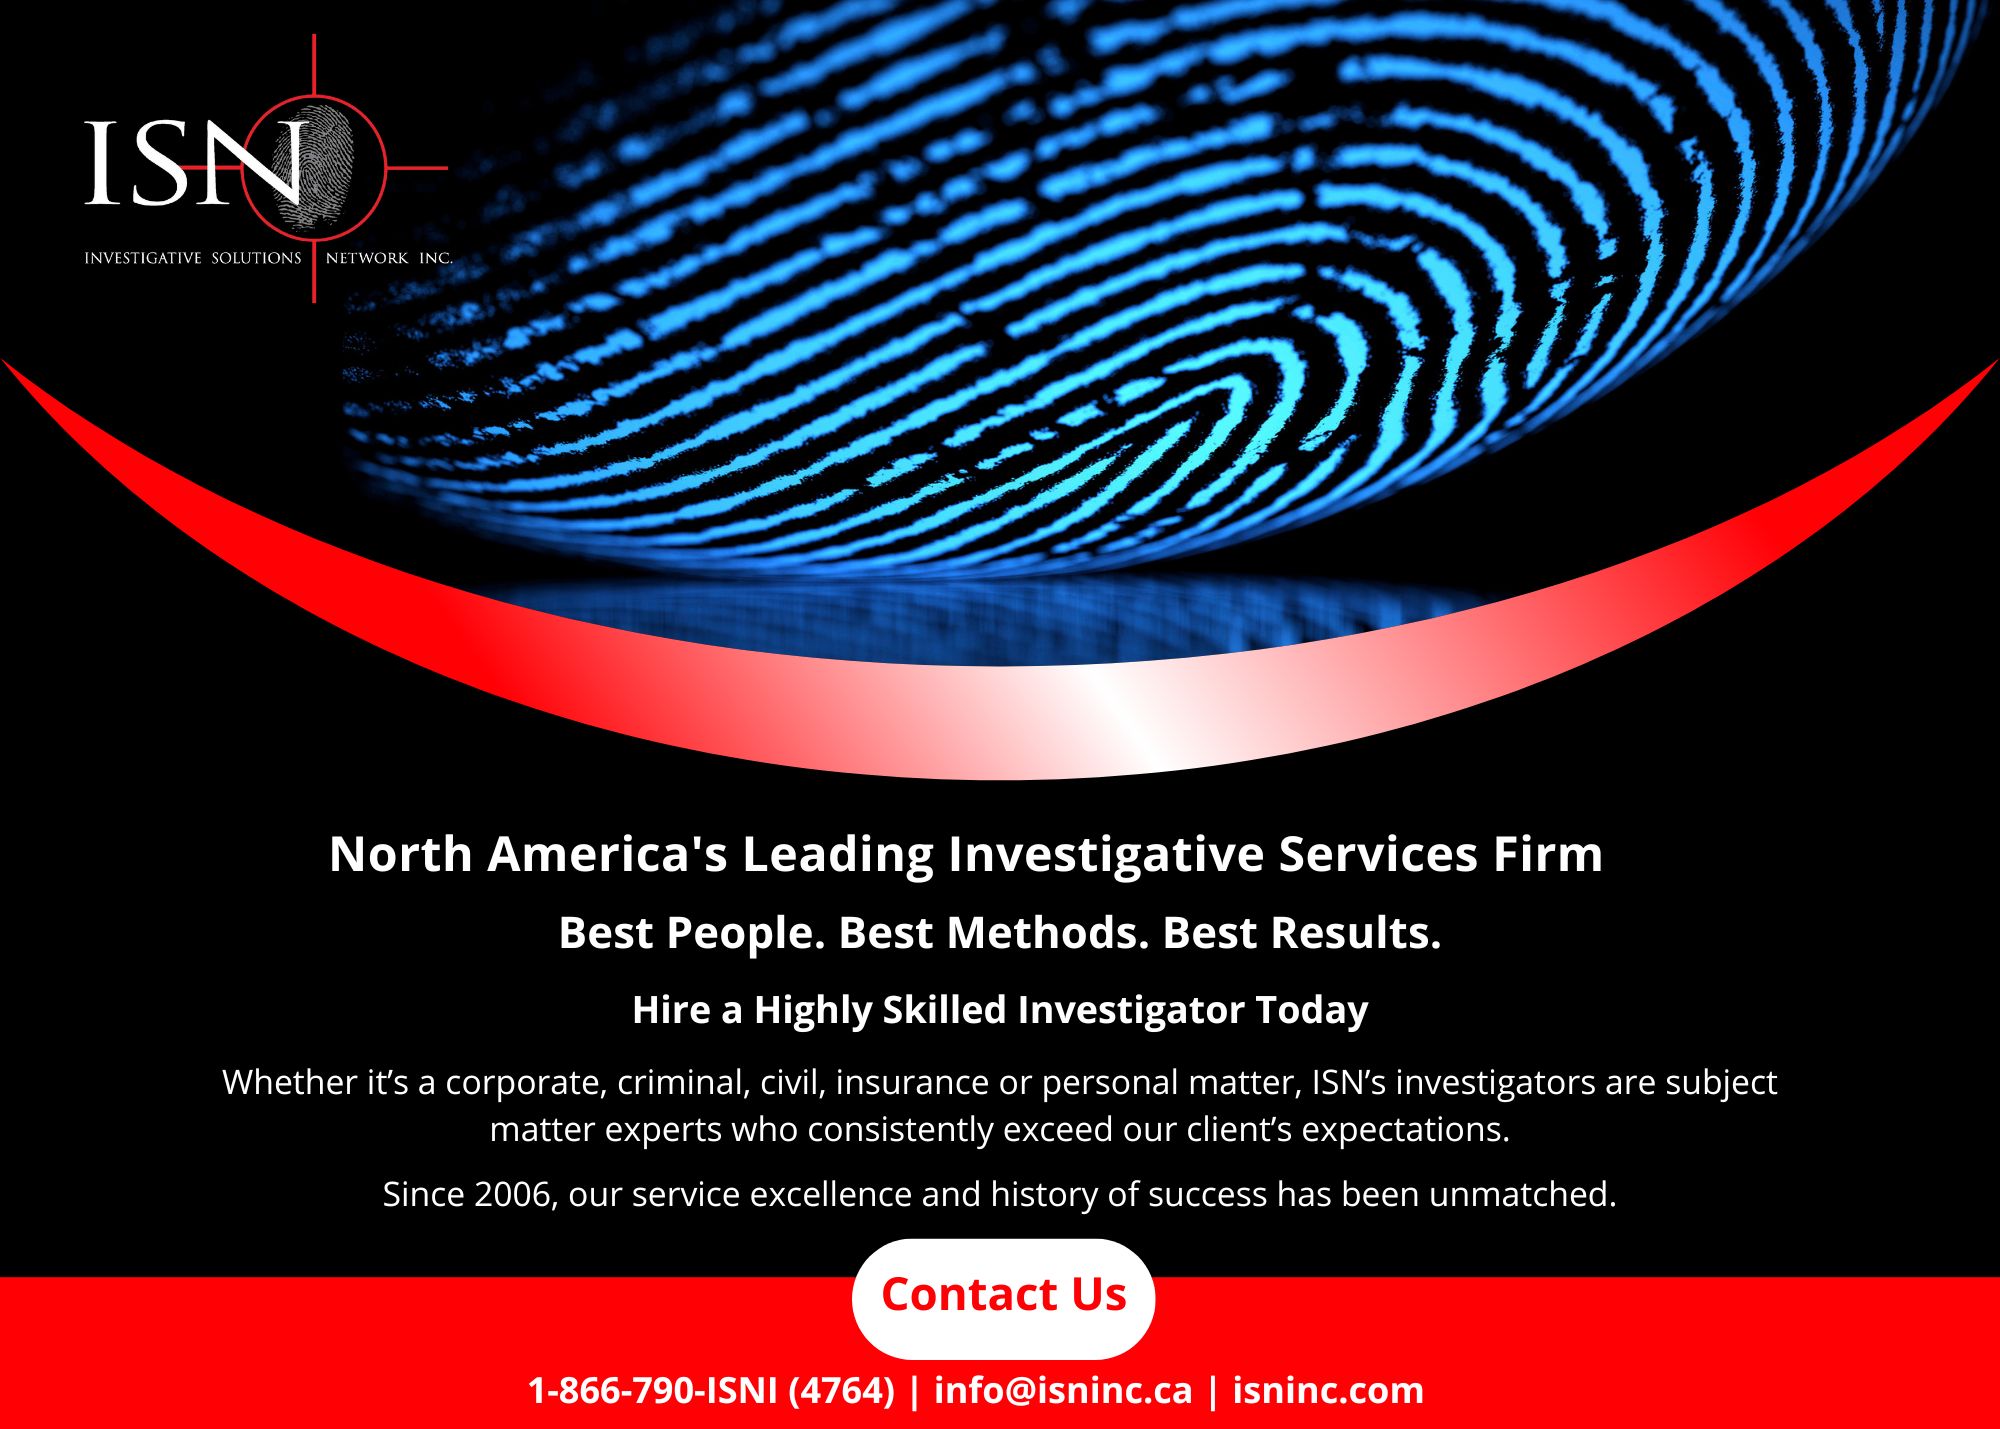 Investigative Solutions Network